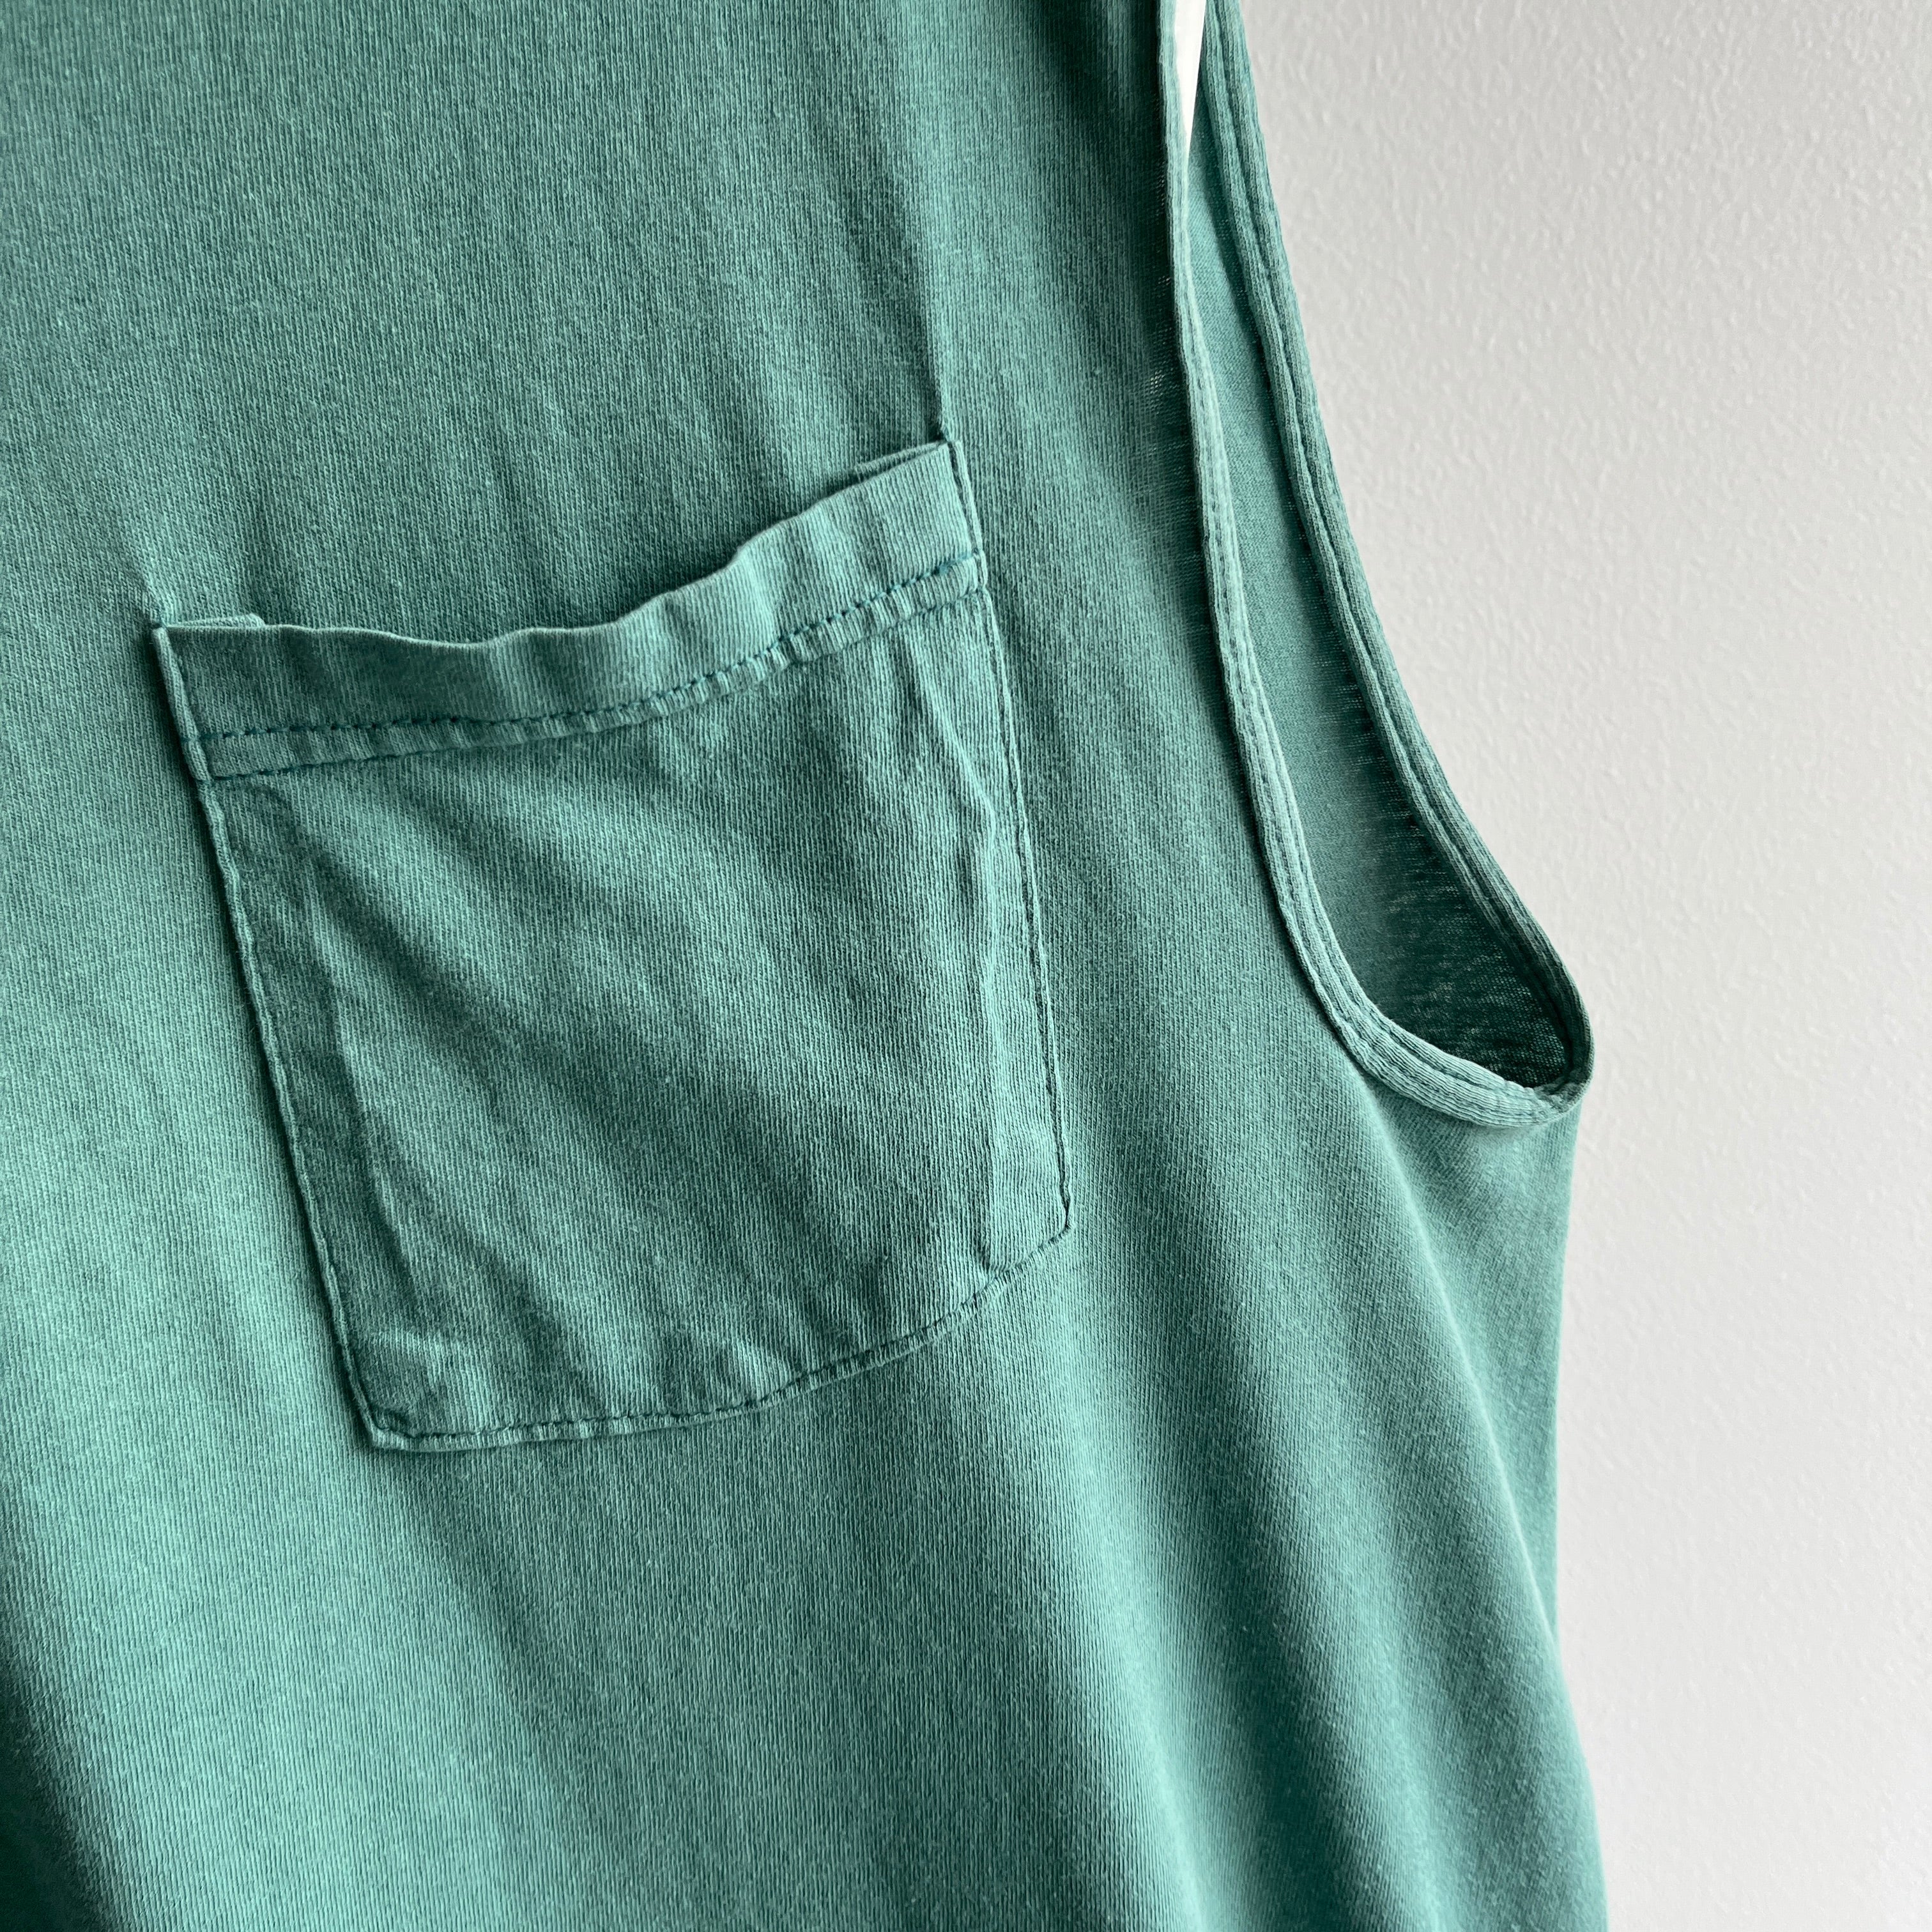 1990s FOTL Jade Green Muscle Tank Pocket T-Shirt